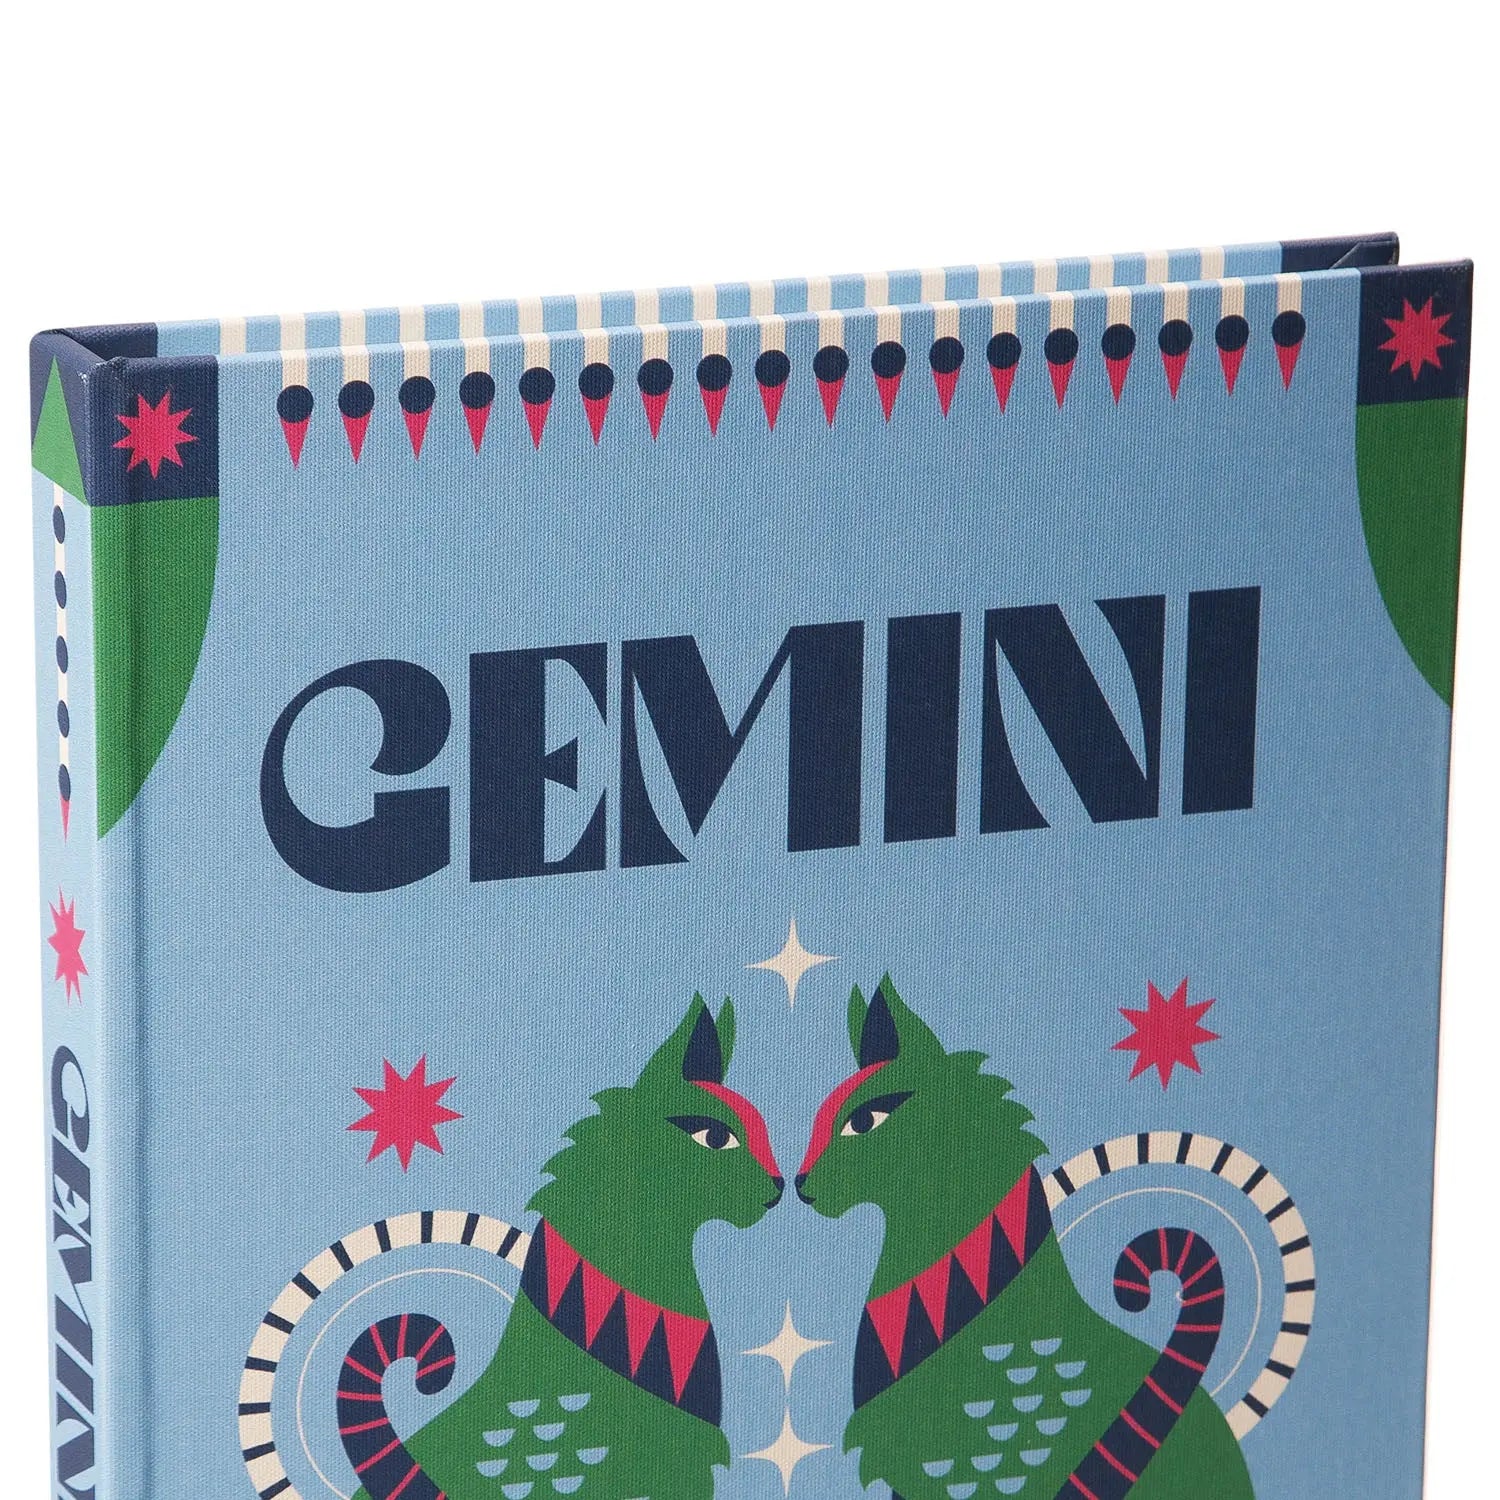 Homedock Book Box Signs 33 x 25 cm – Gemini Mart